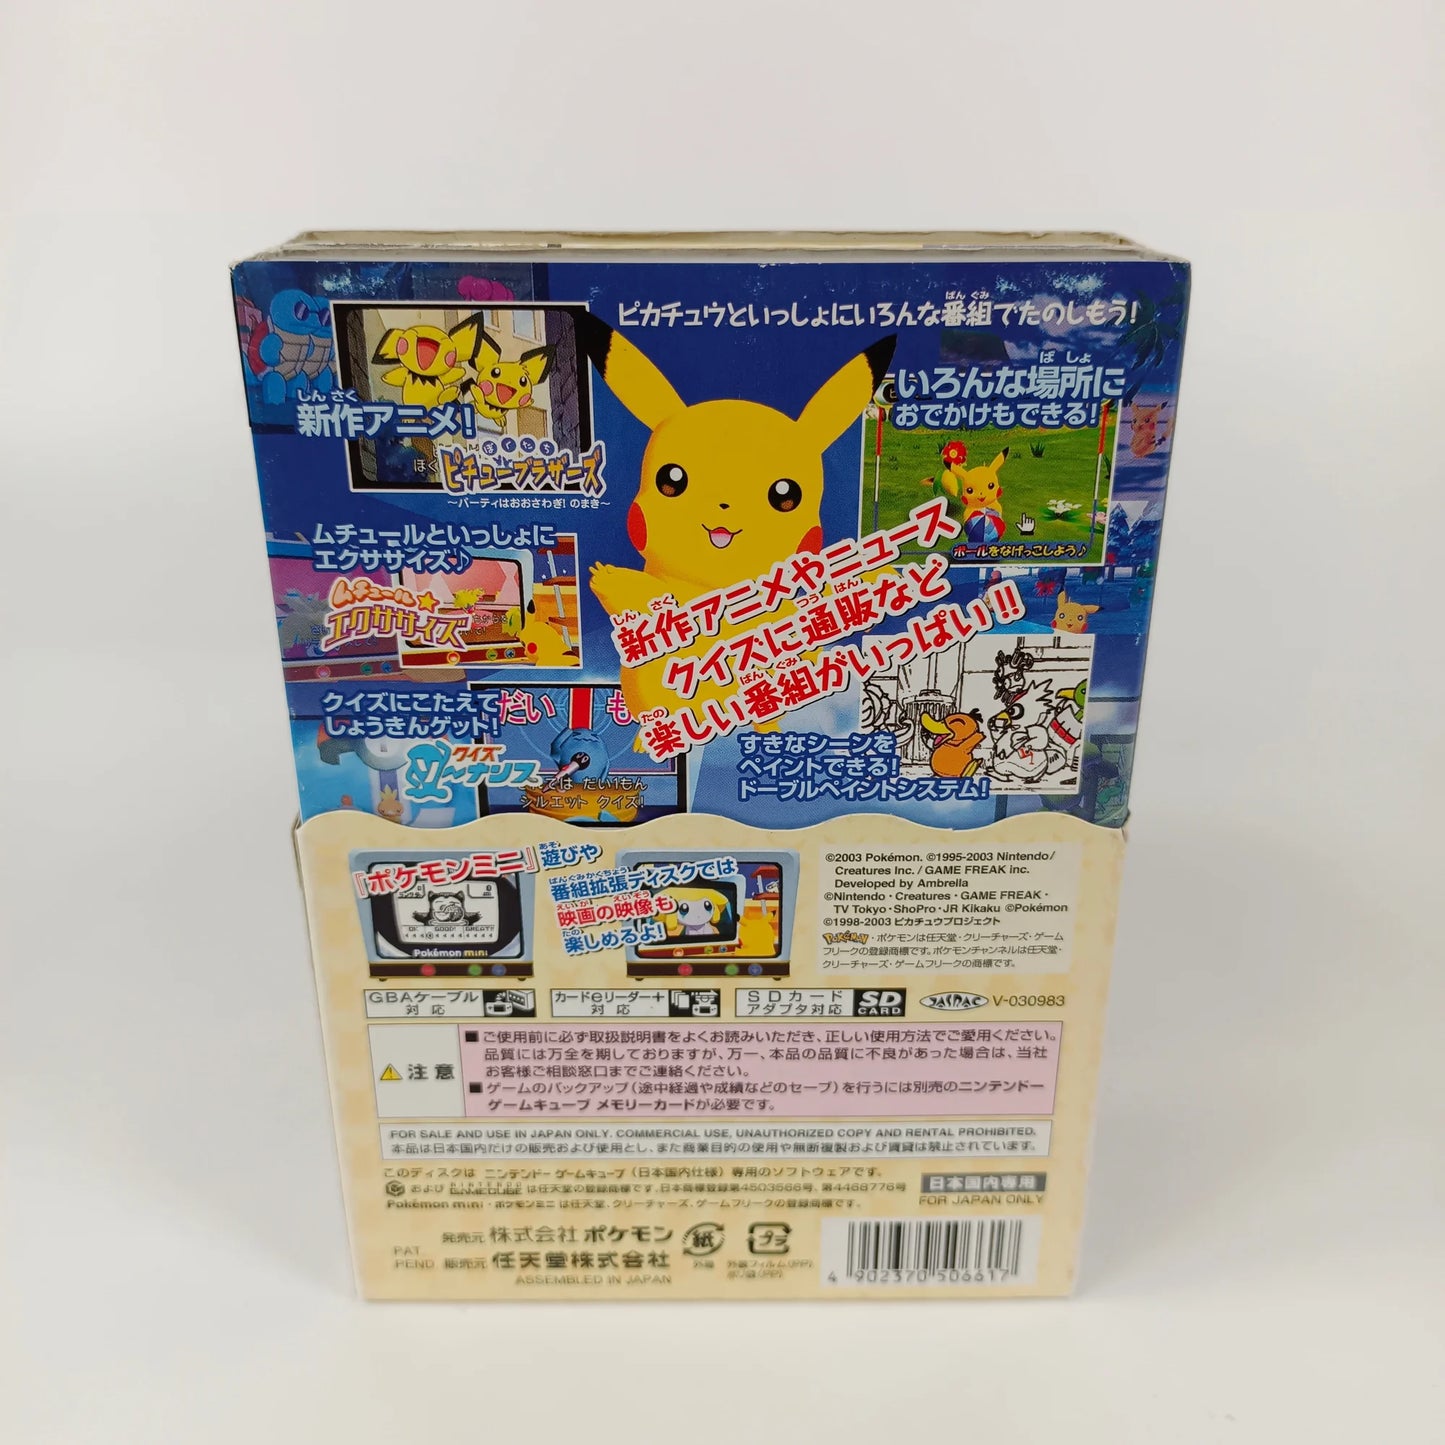 Pokémon Channel ~Together with Pikachu!